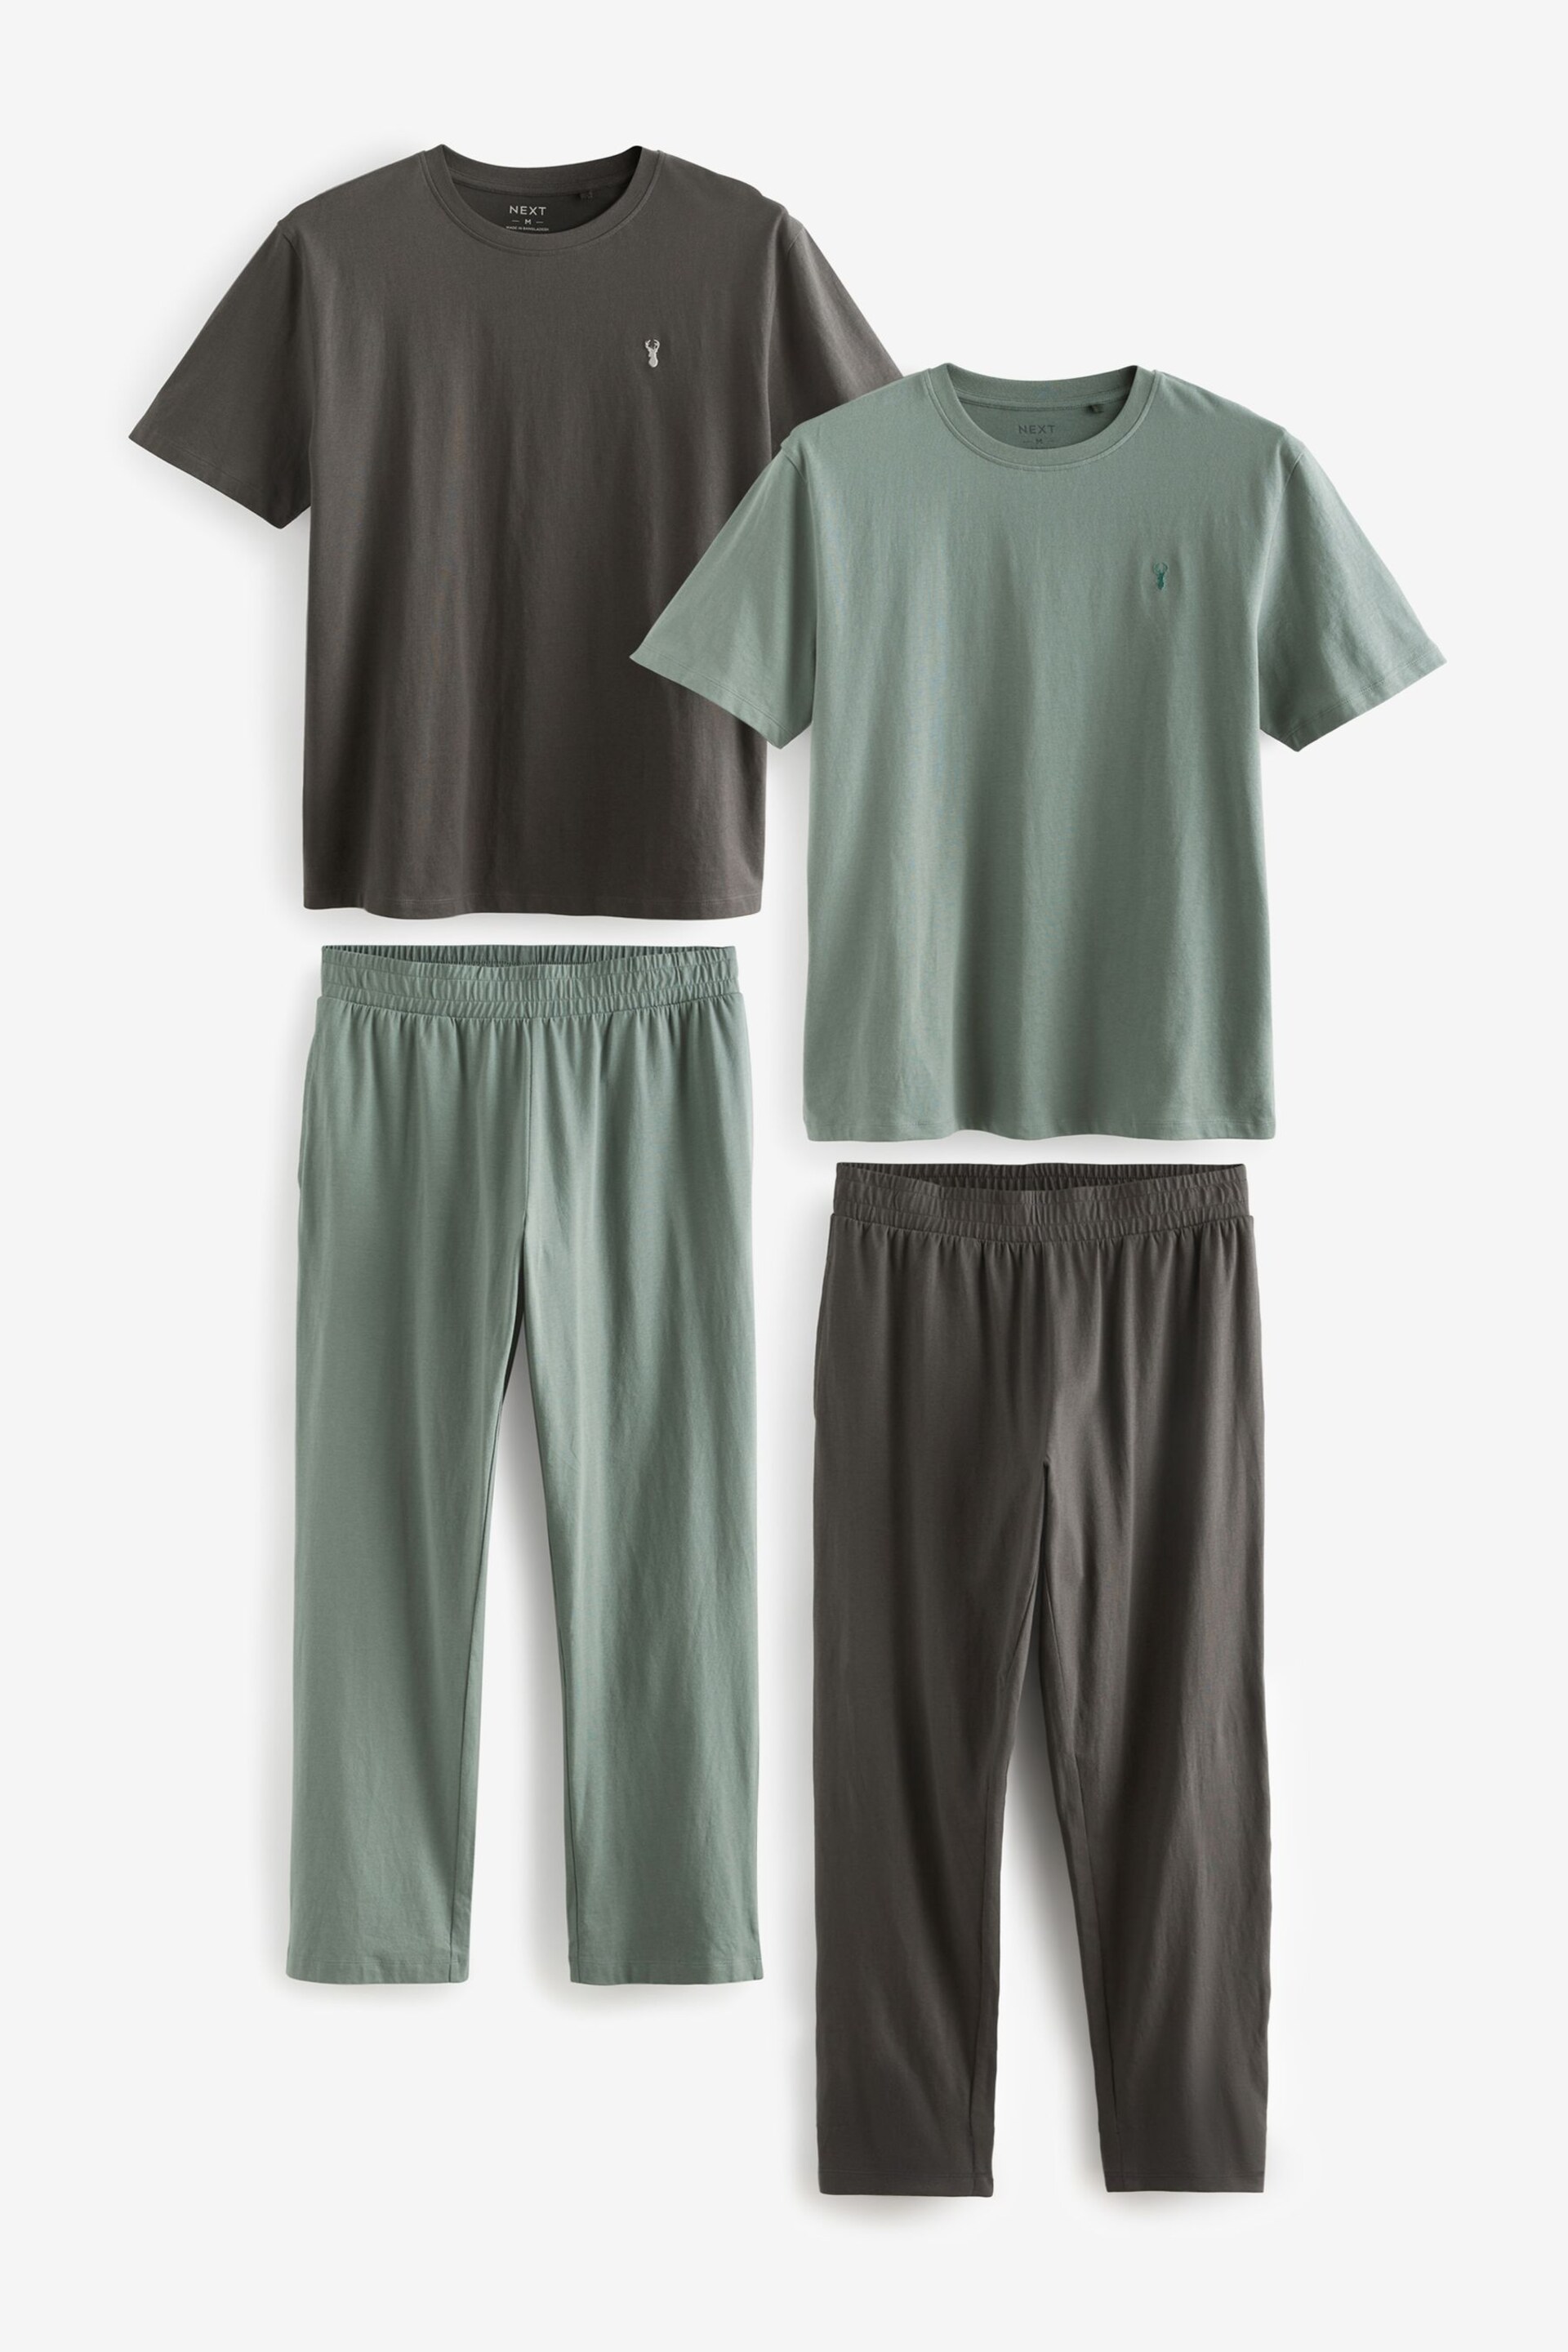 Grey/Sage Green Short Sleeve Jersey Pyjamas Set - Image 8 of 14